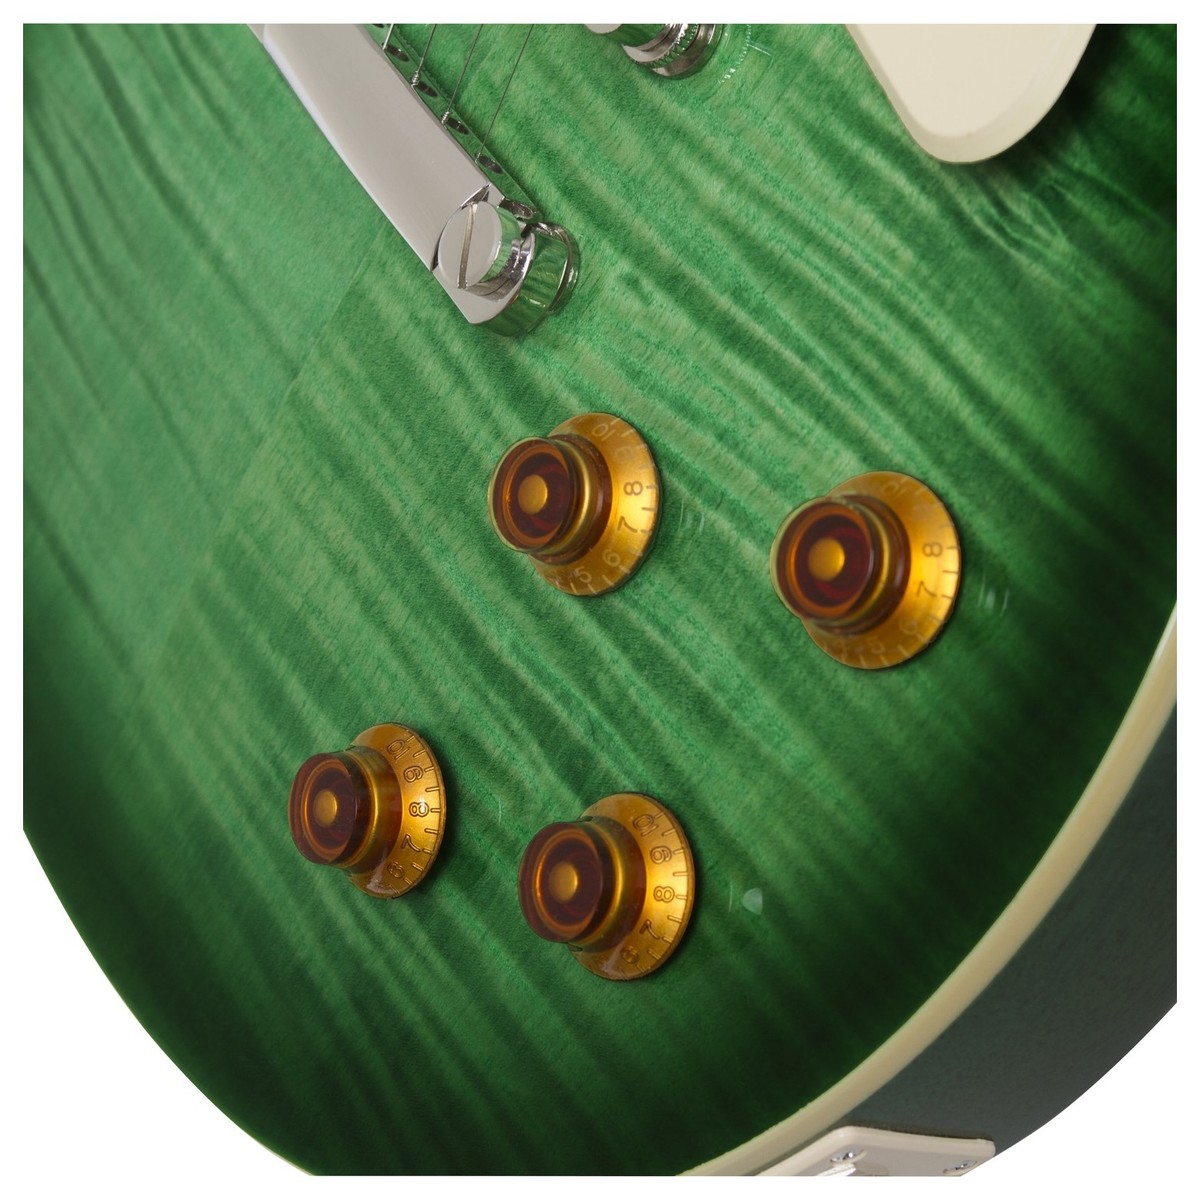 Epiphone Les Paul Standard Plus Top Pro 2018 Hh Ht Pf - Green Burst - Single cut electric guitar - Variation 4